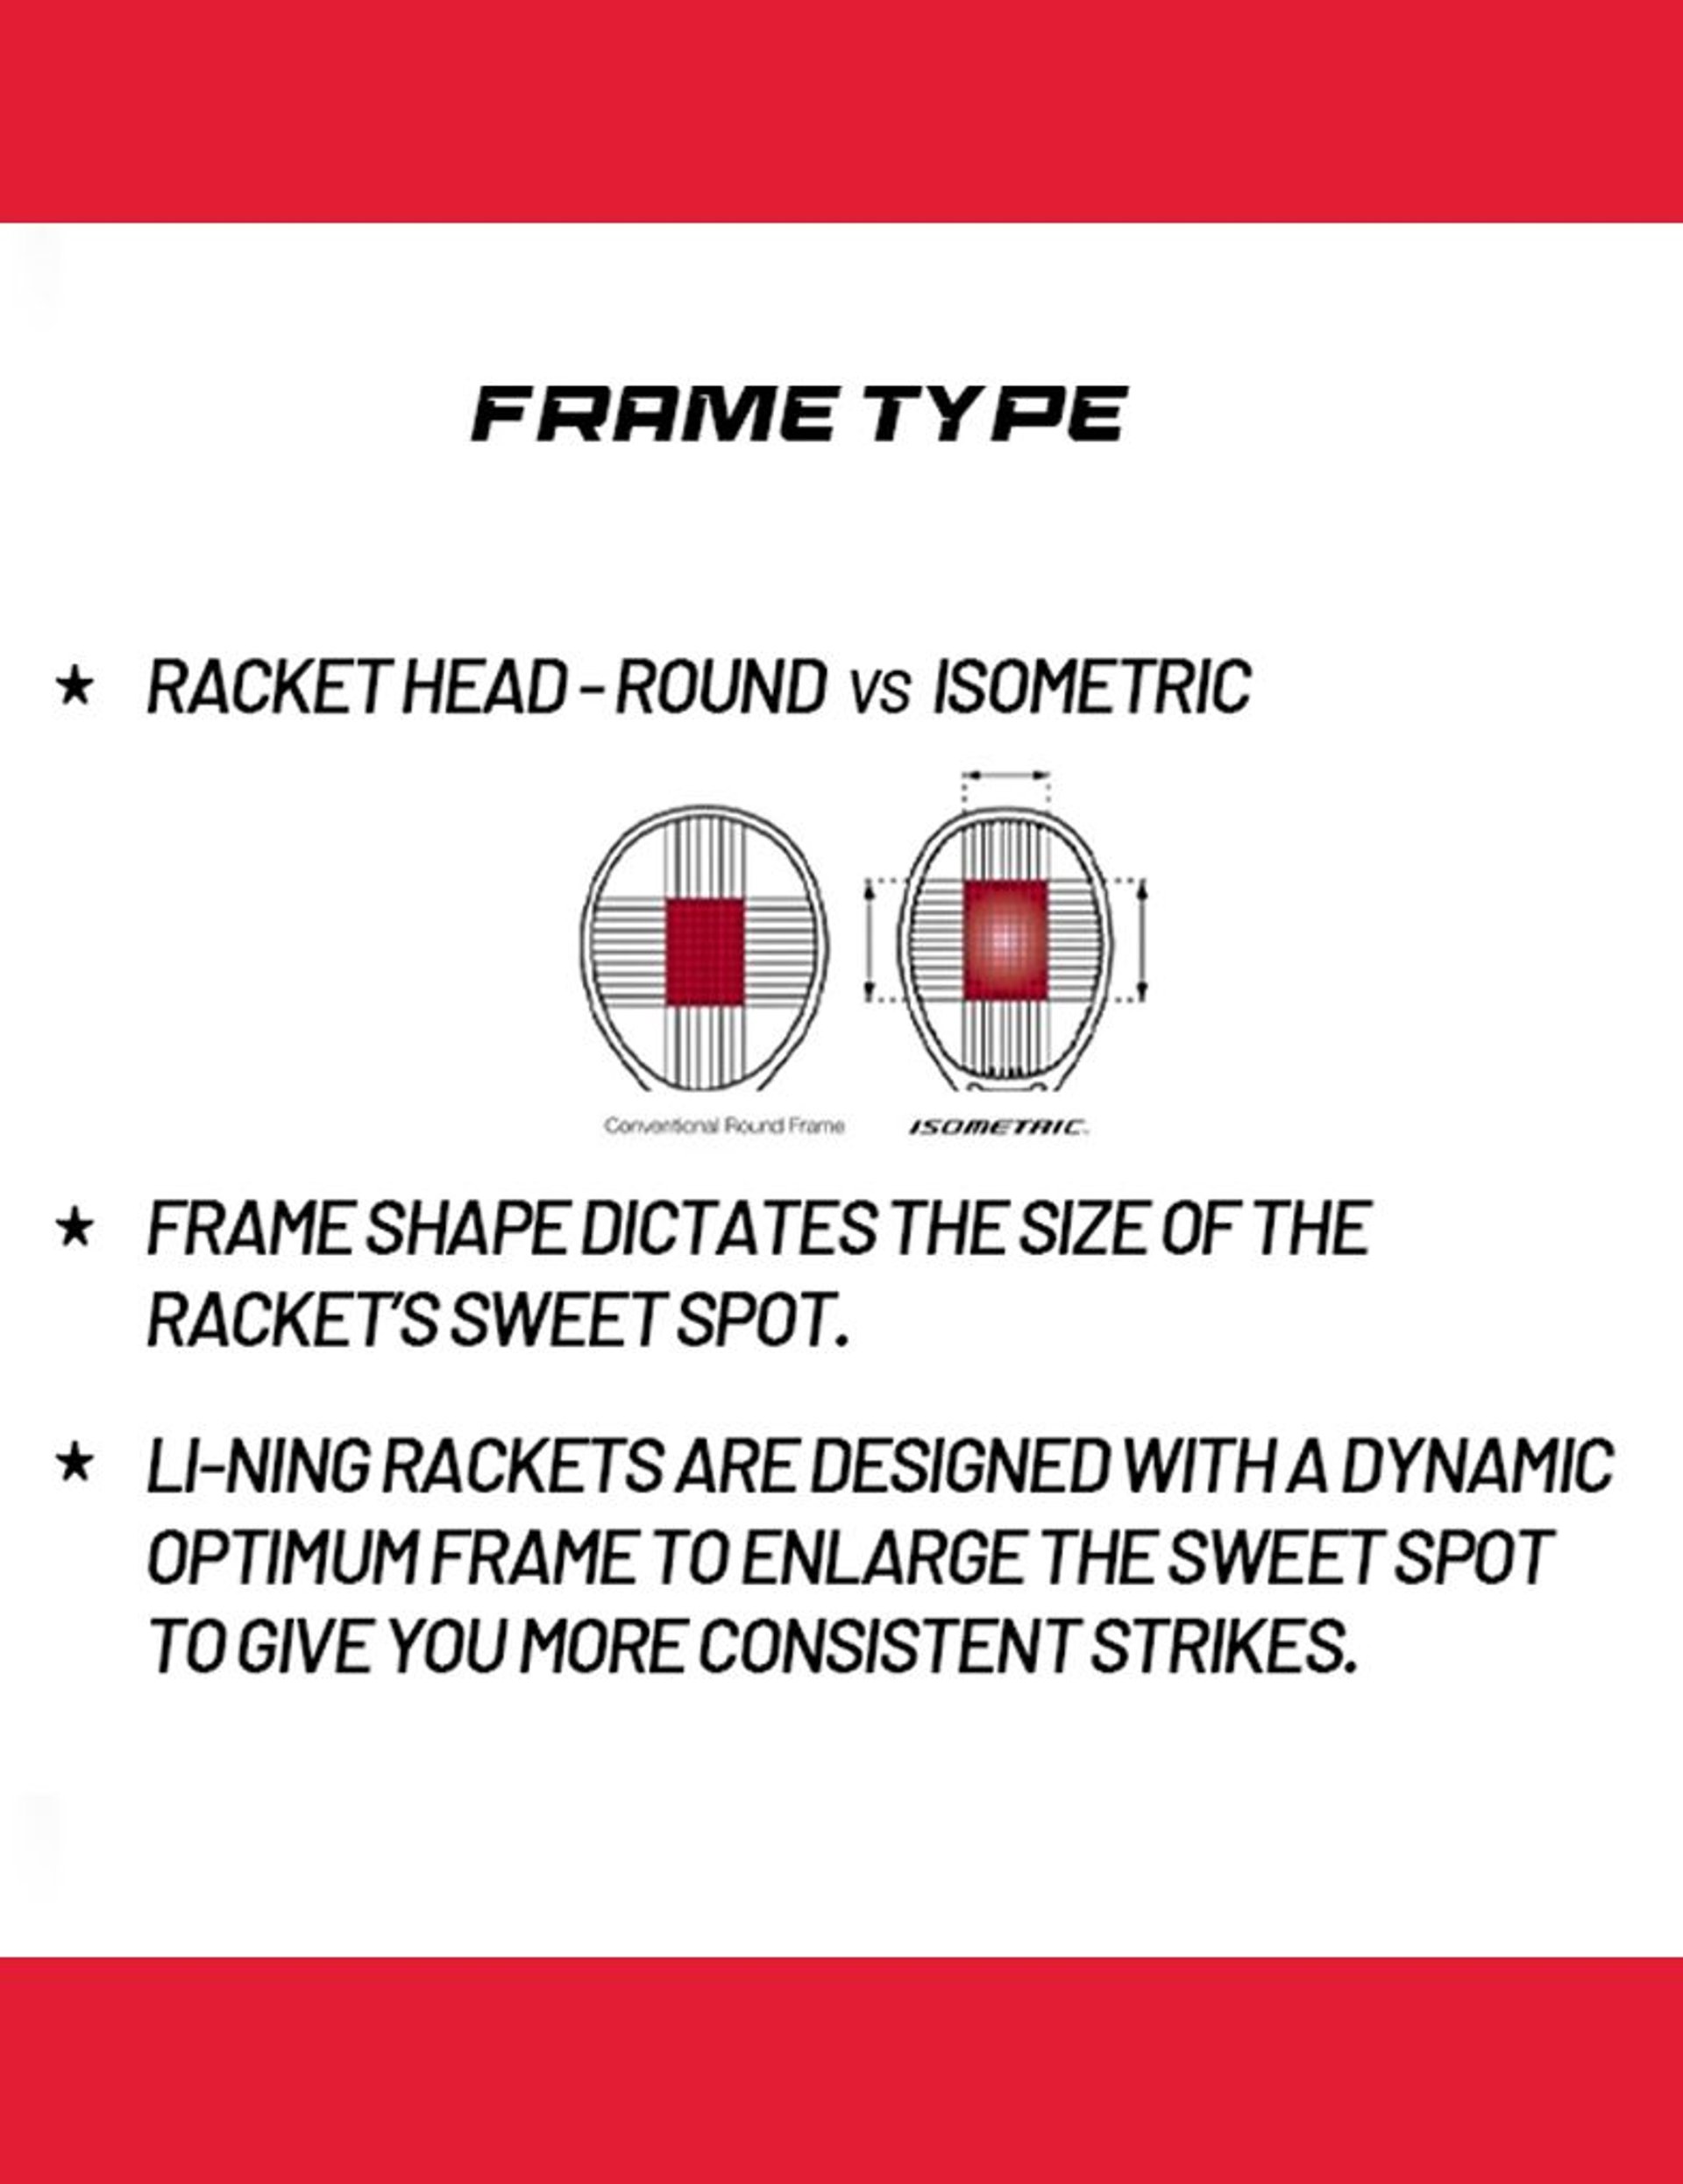 Badminton racket frame types